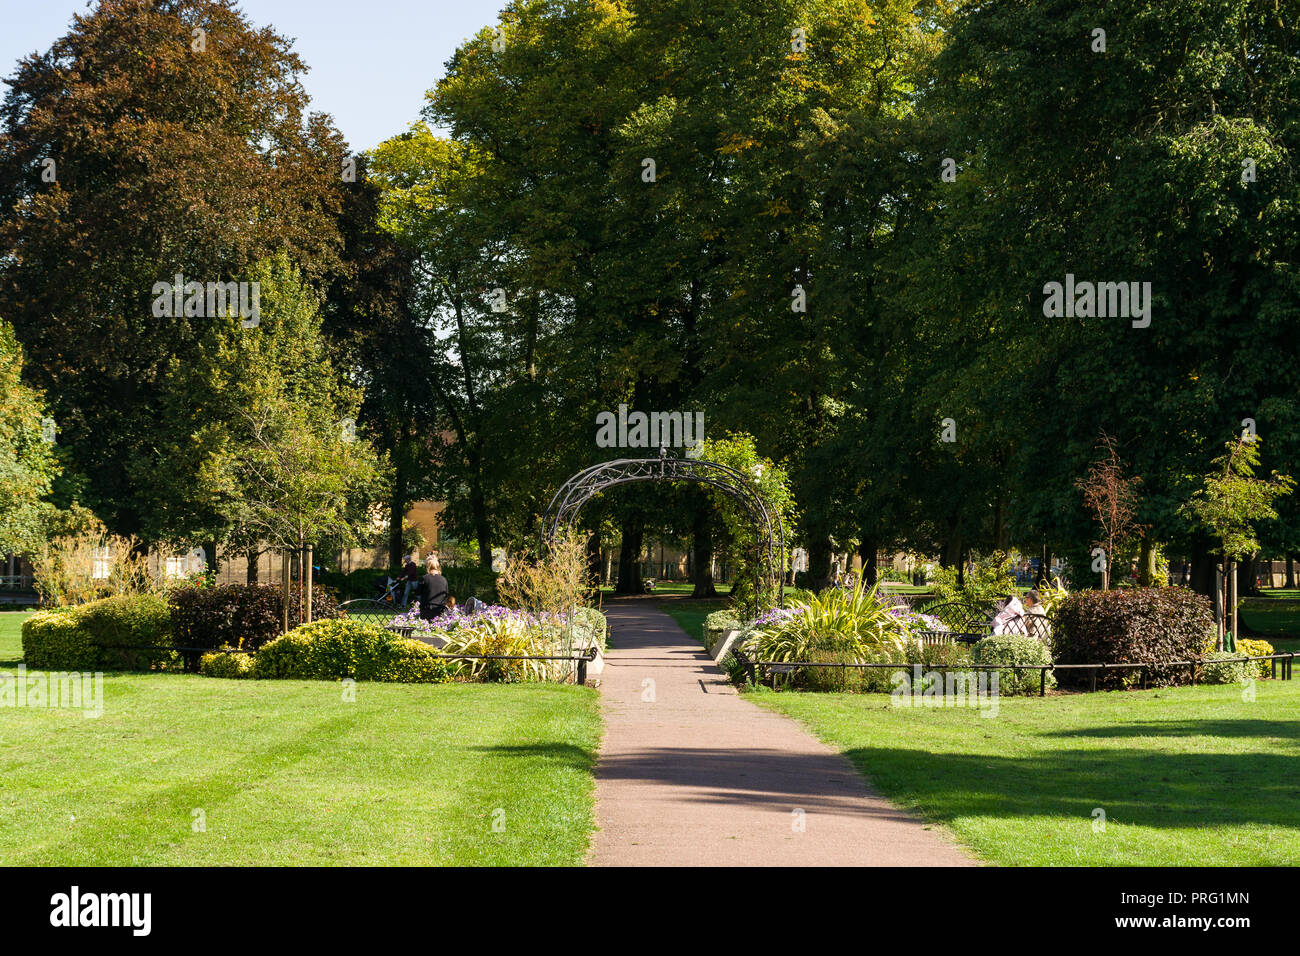 The Princess Diana memorial garden in Christ's Pieces on a sunny Summer day, Cambridge, UK Stock Photo